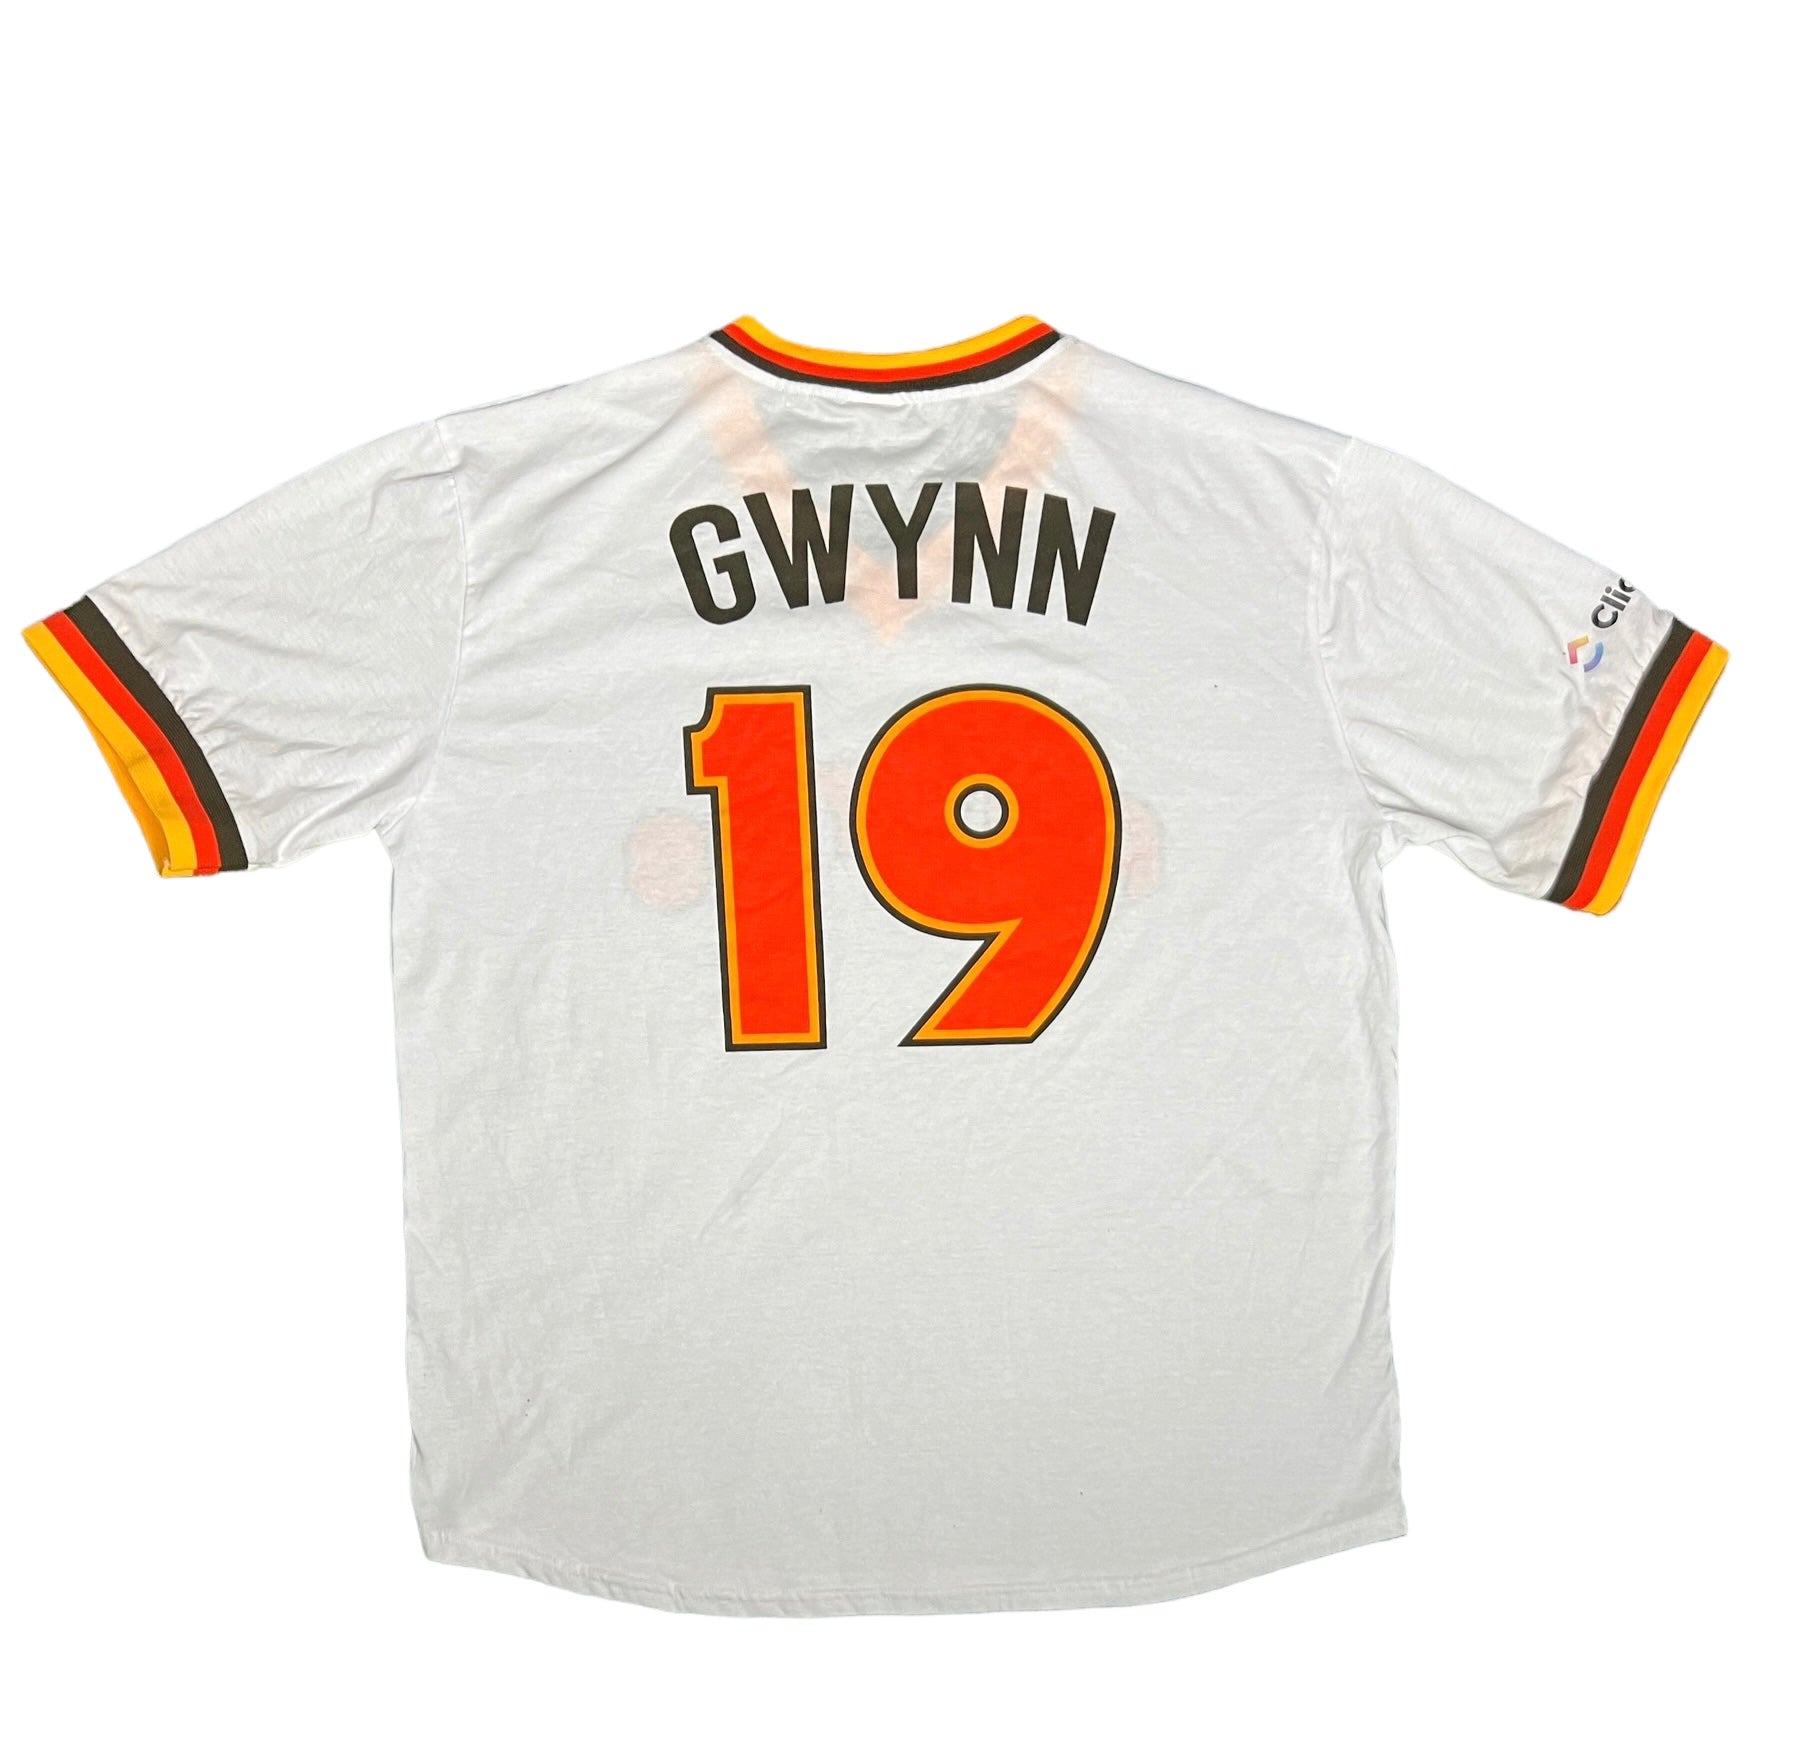 Tony Gwynn Men MLB Jerseys for sale